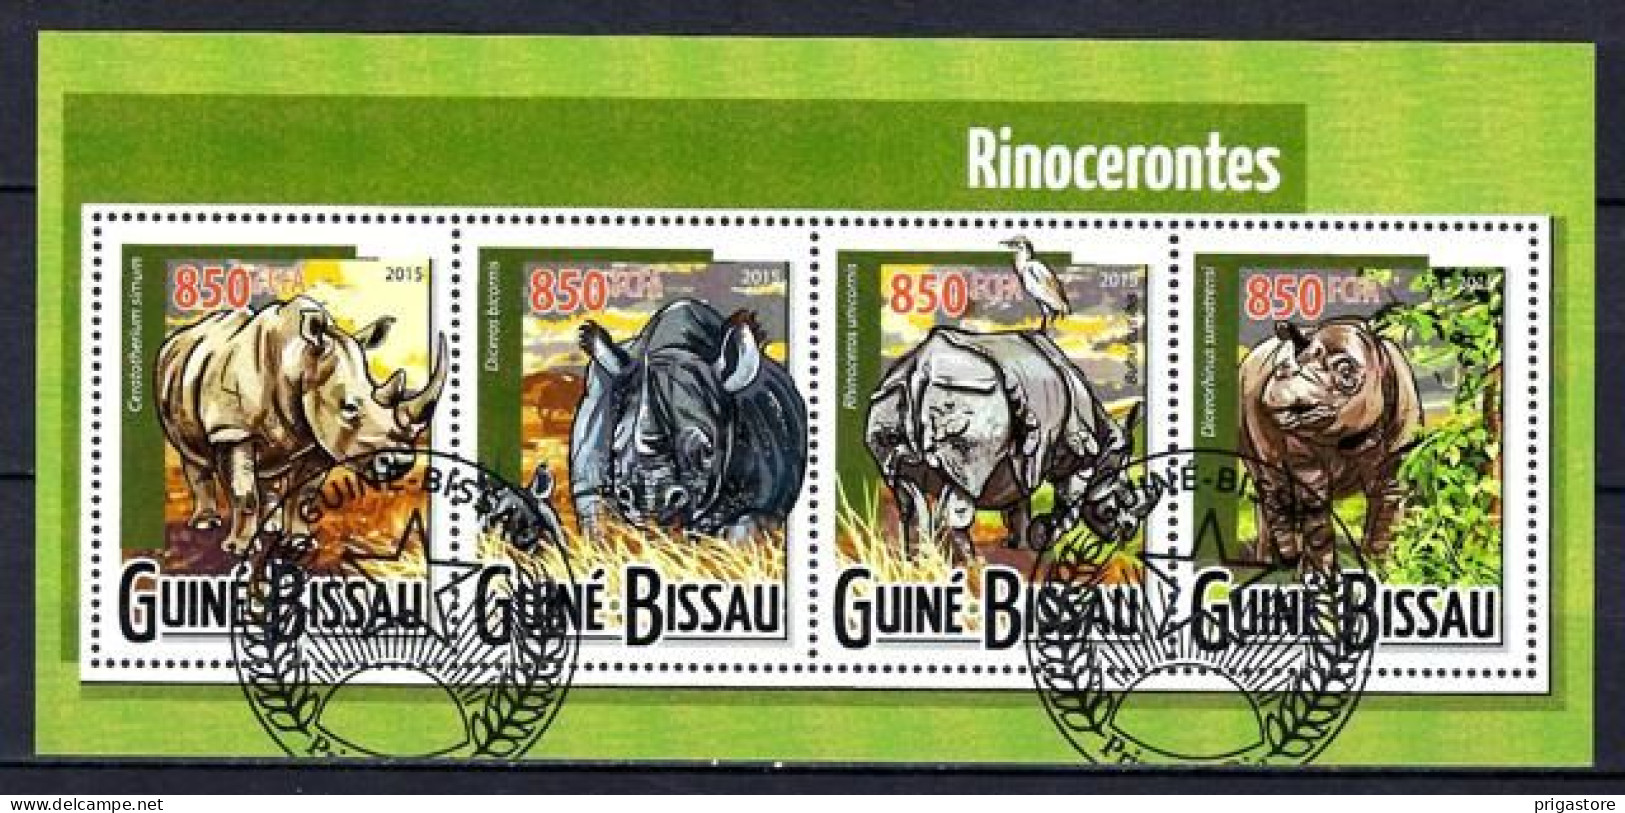 Animaux Rhinocéros Guinée Bissau 2015 (329) Yvert N° 6012 à 6015 Oblitérés Used - Rhinoceros